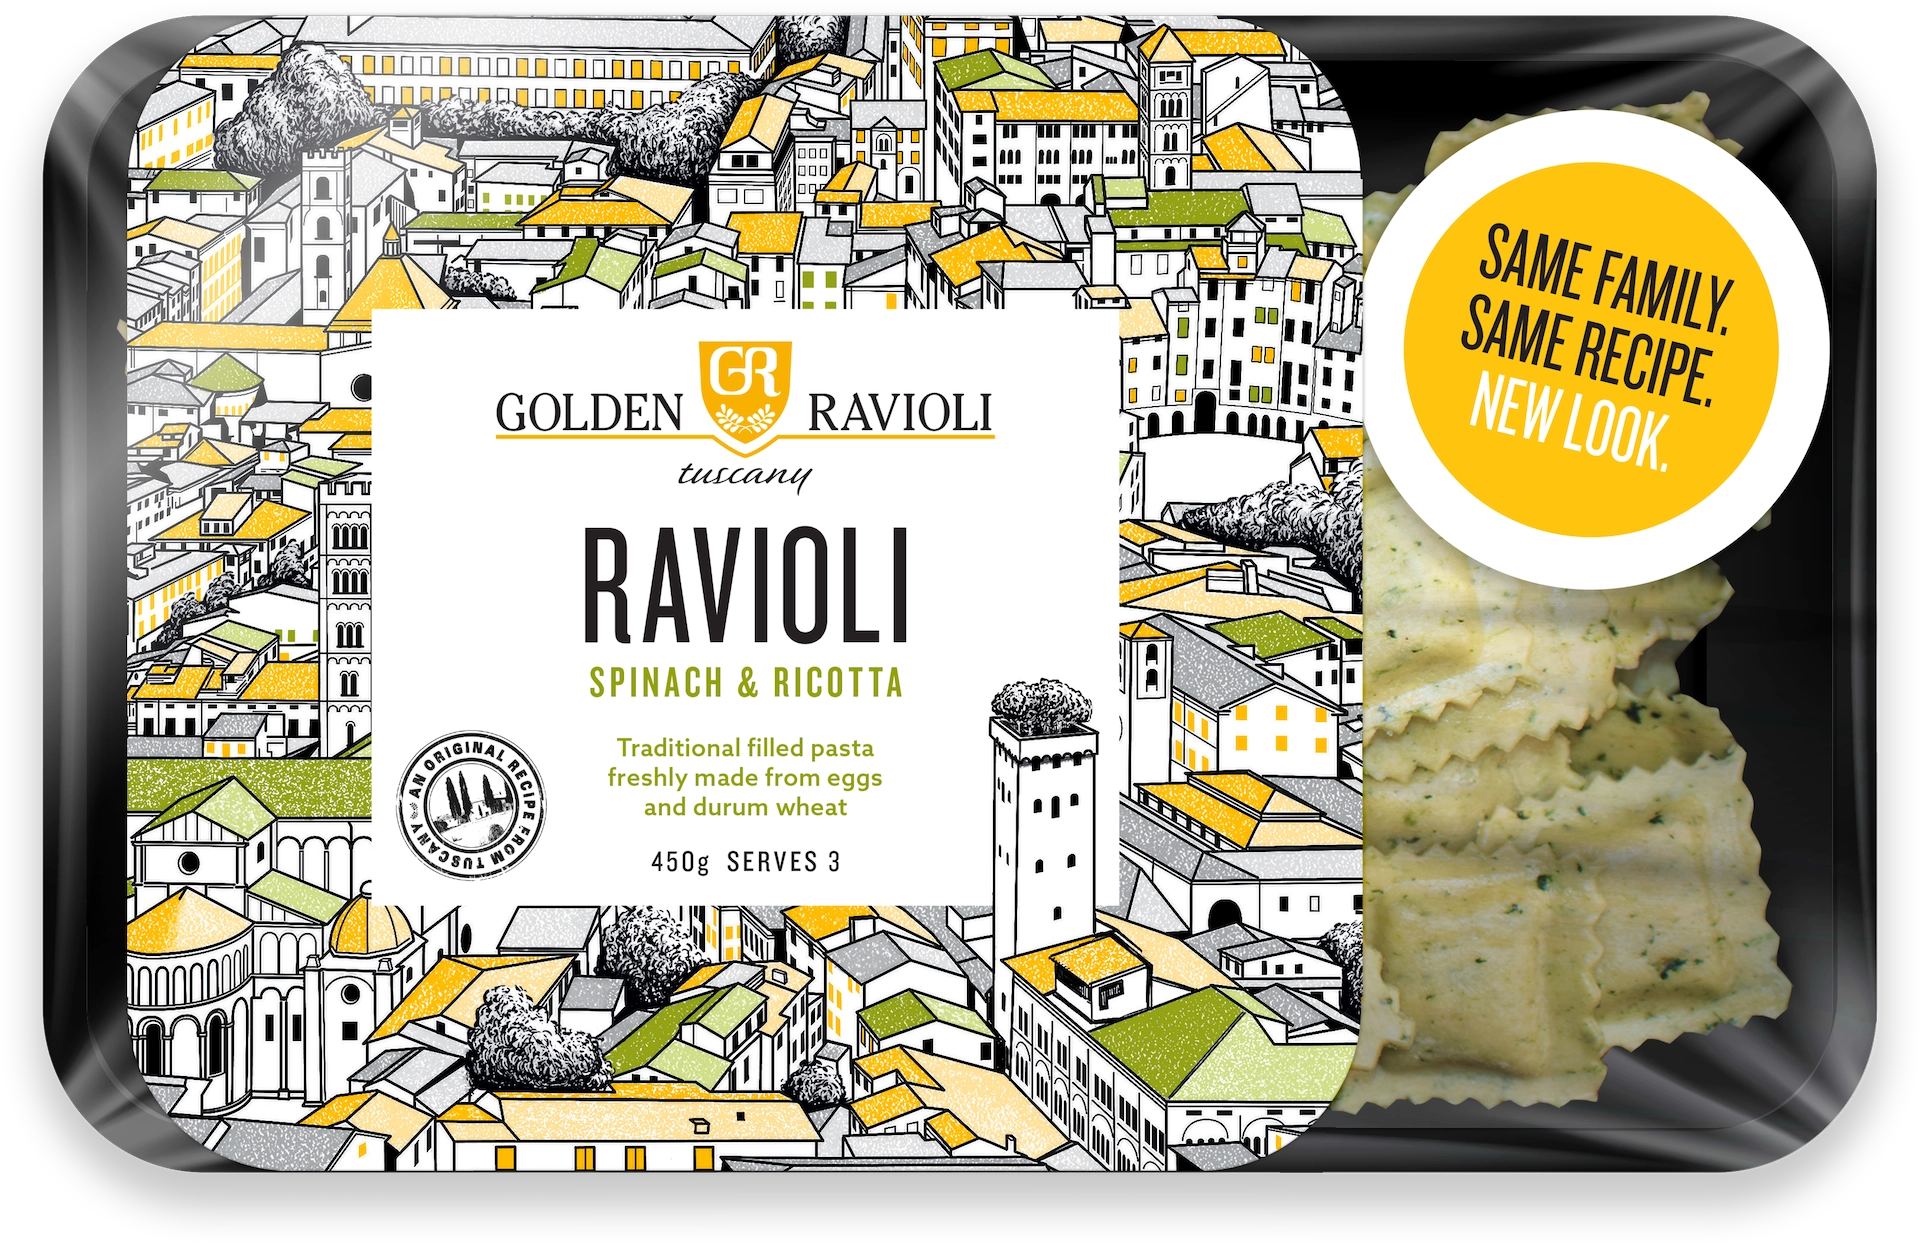 Golden Ravioli’s New Packaging Design